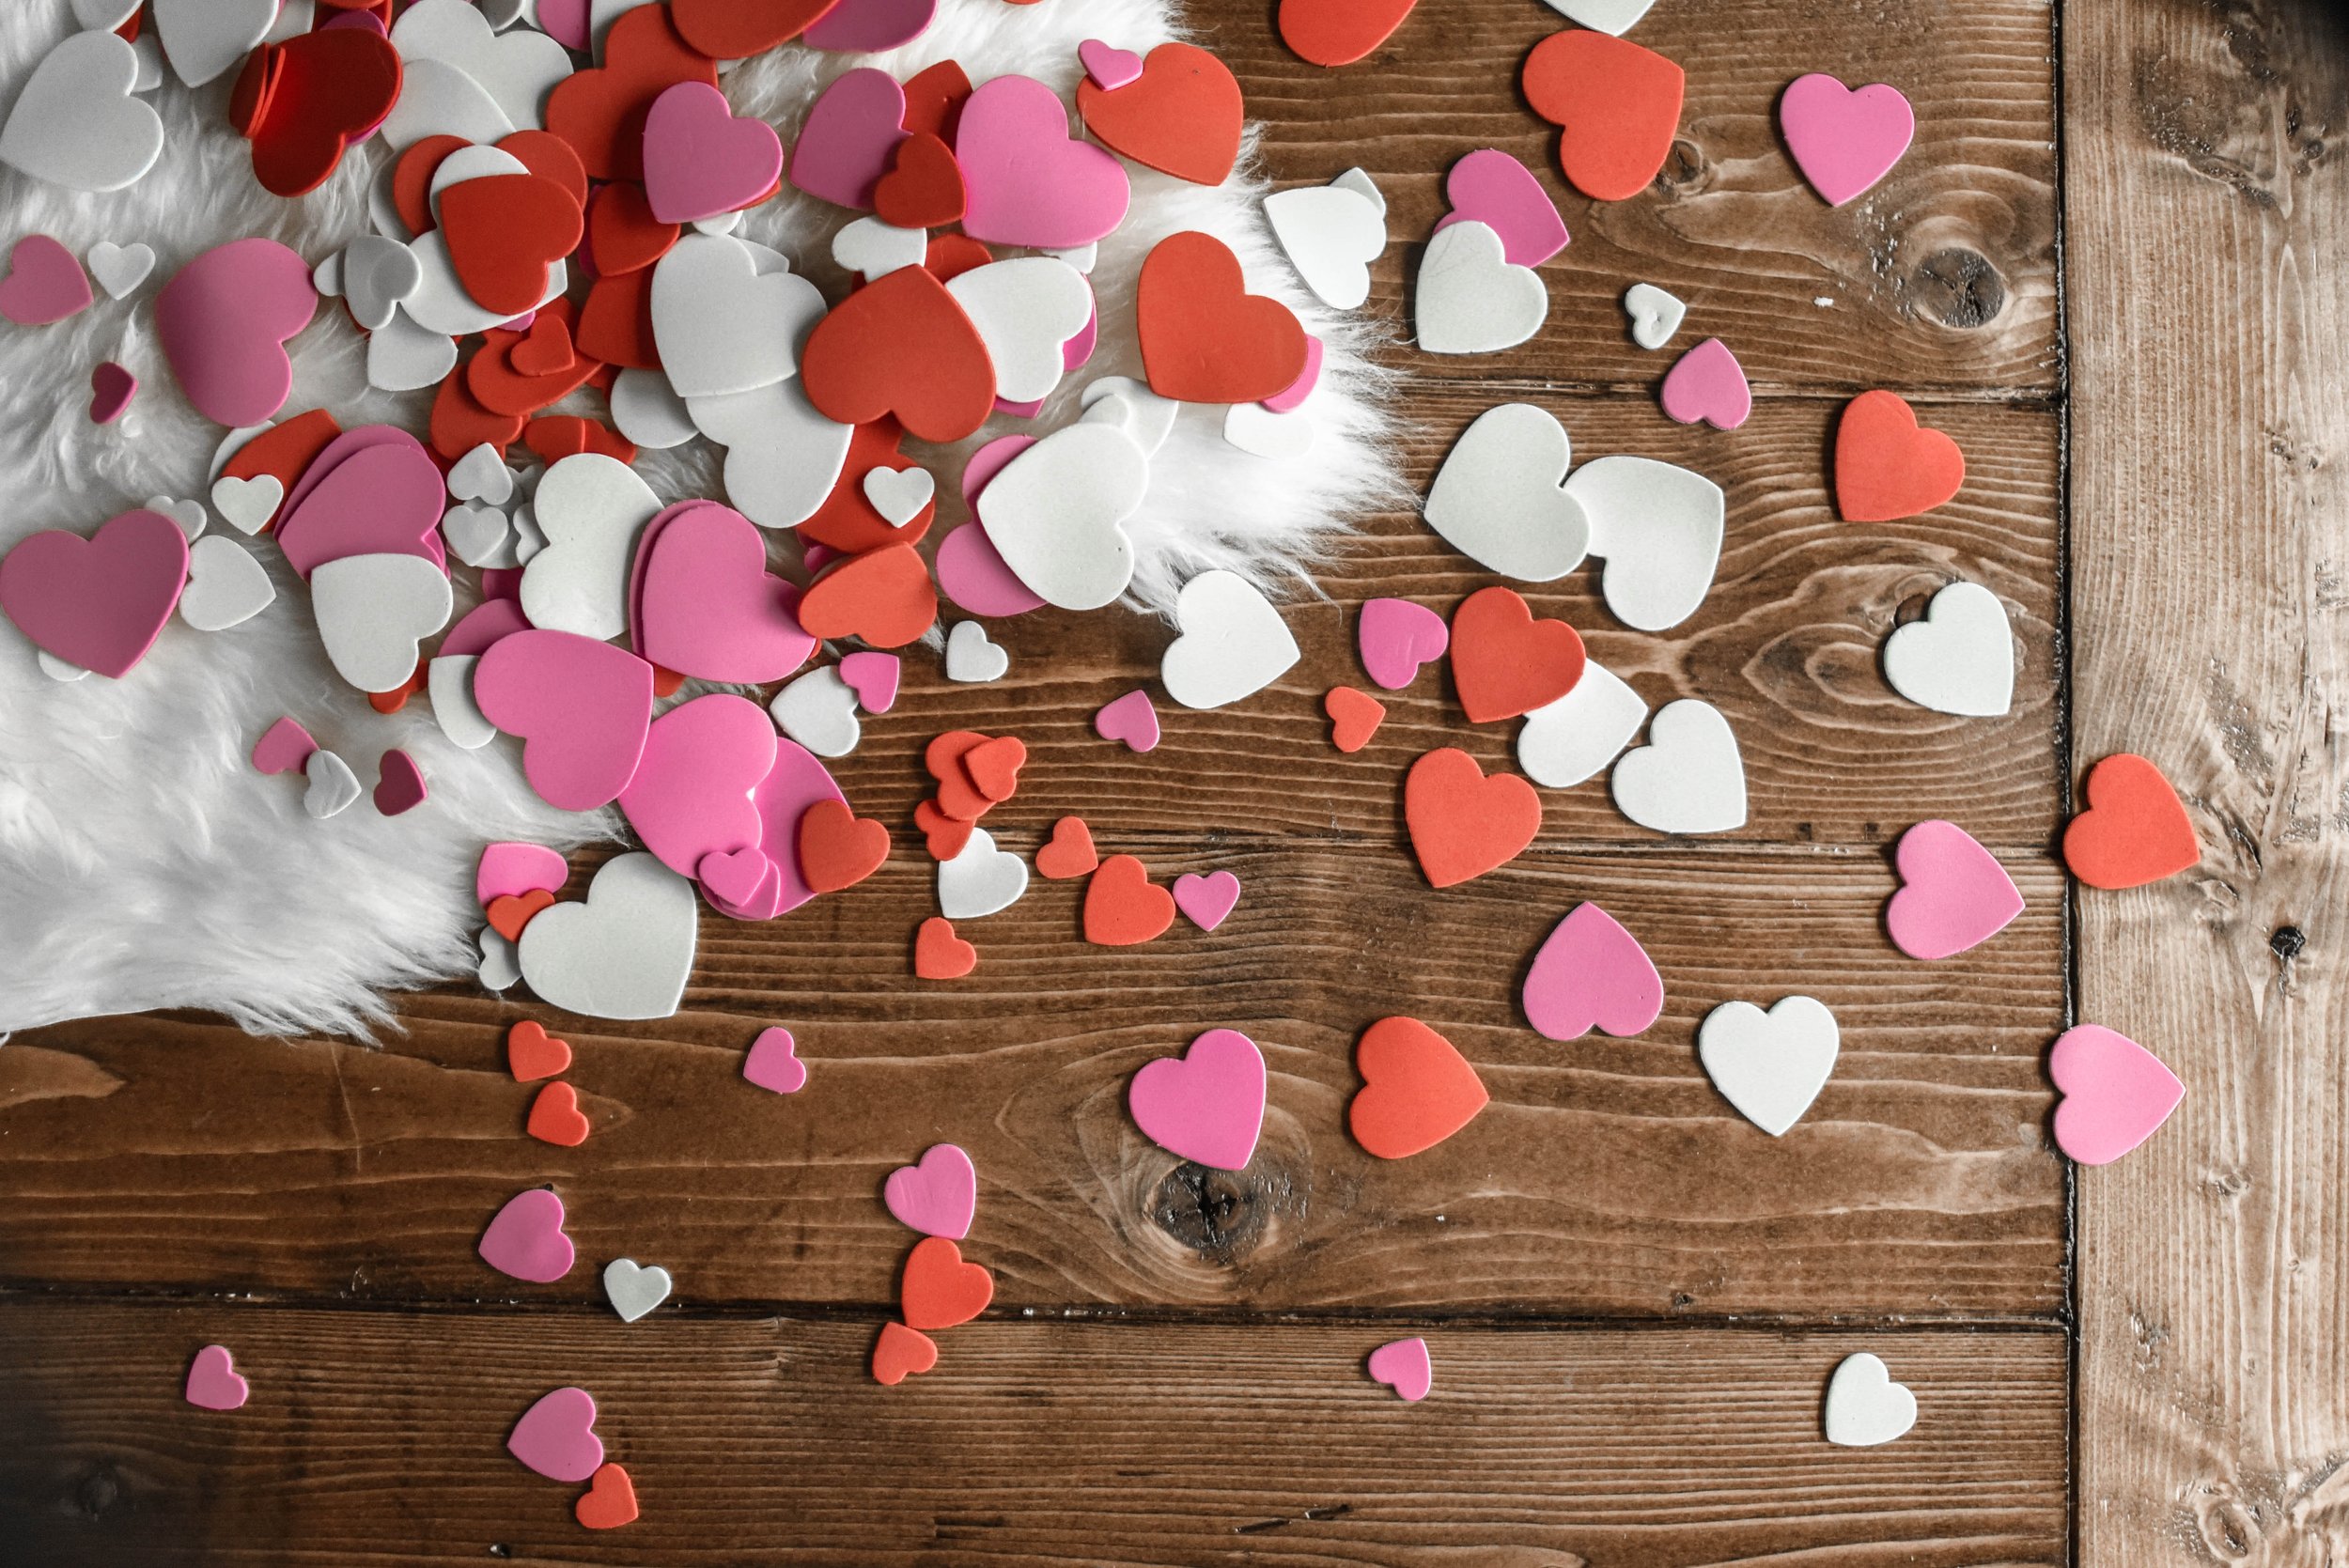 5 super easy Valentine's fundraising ideas